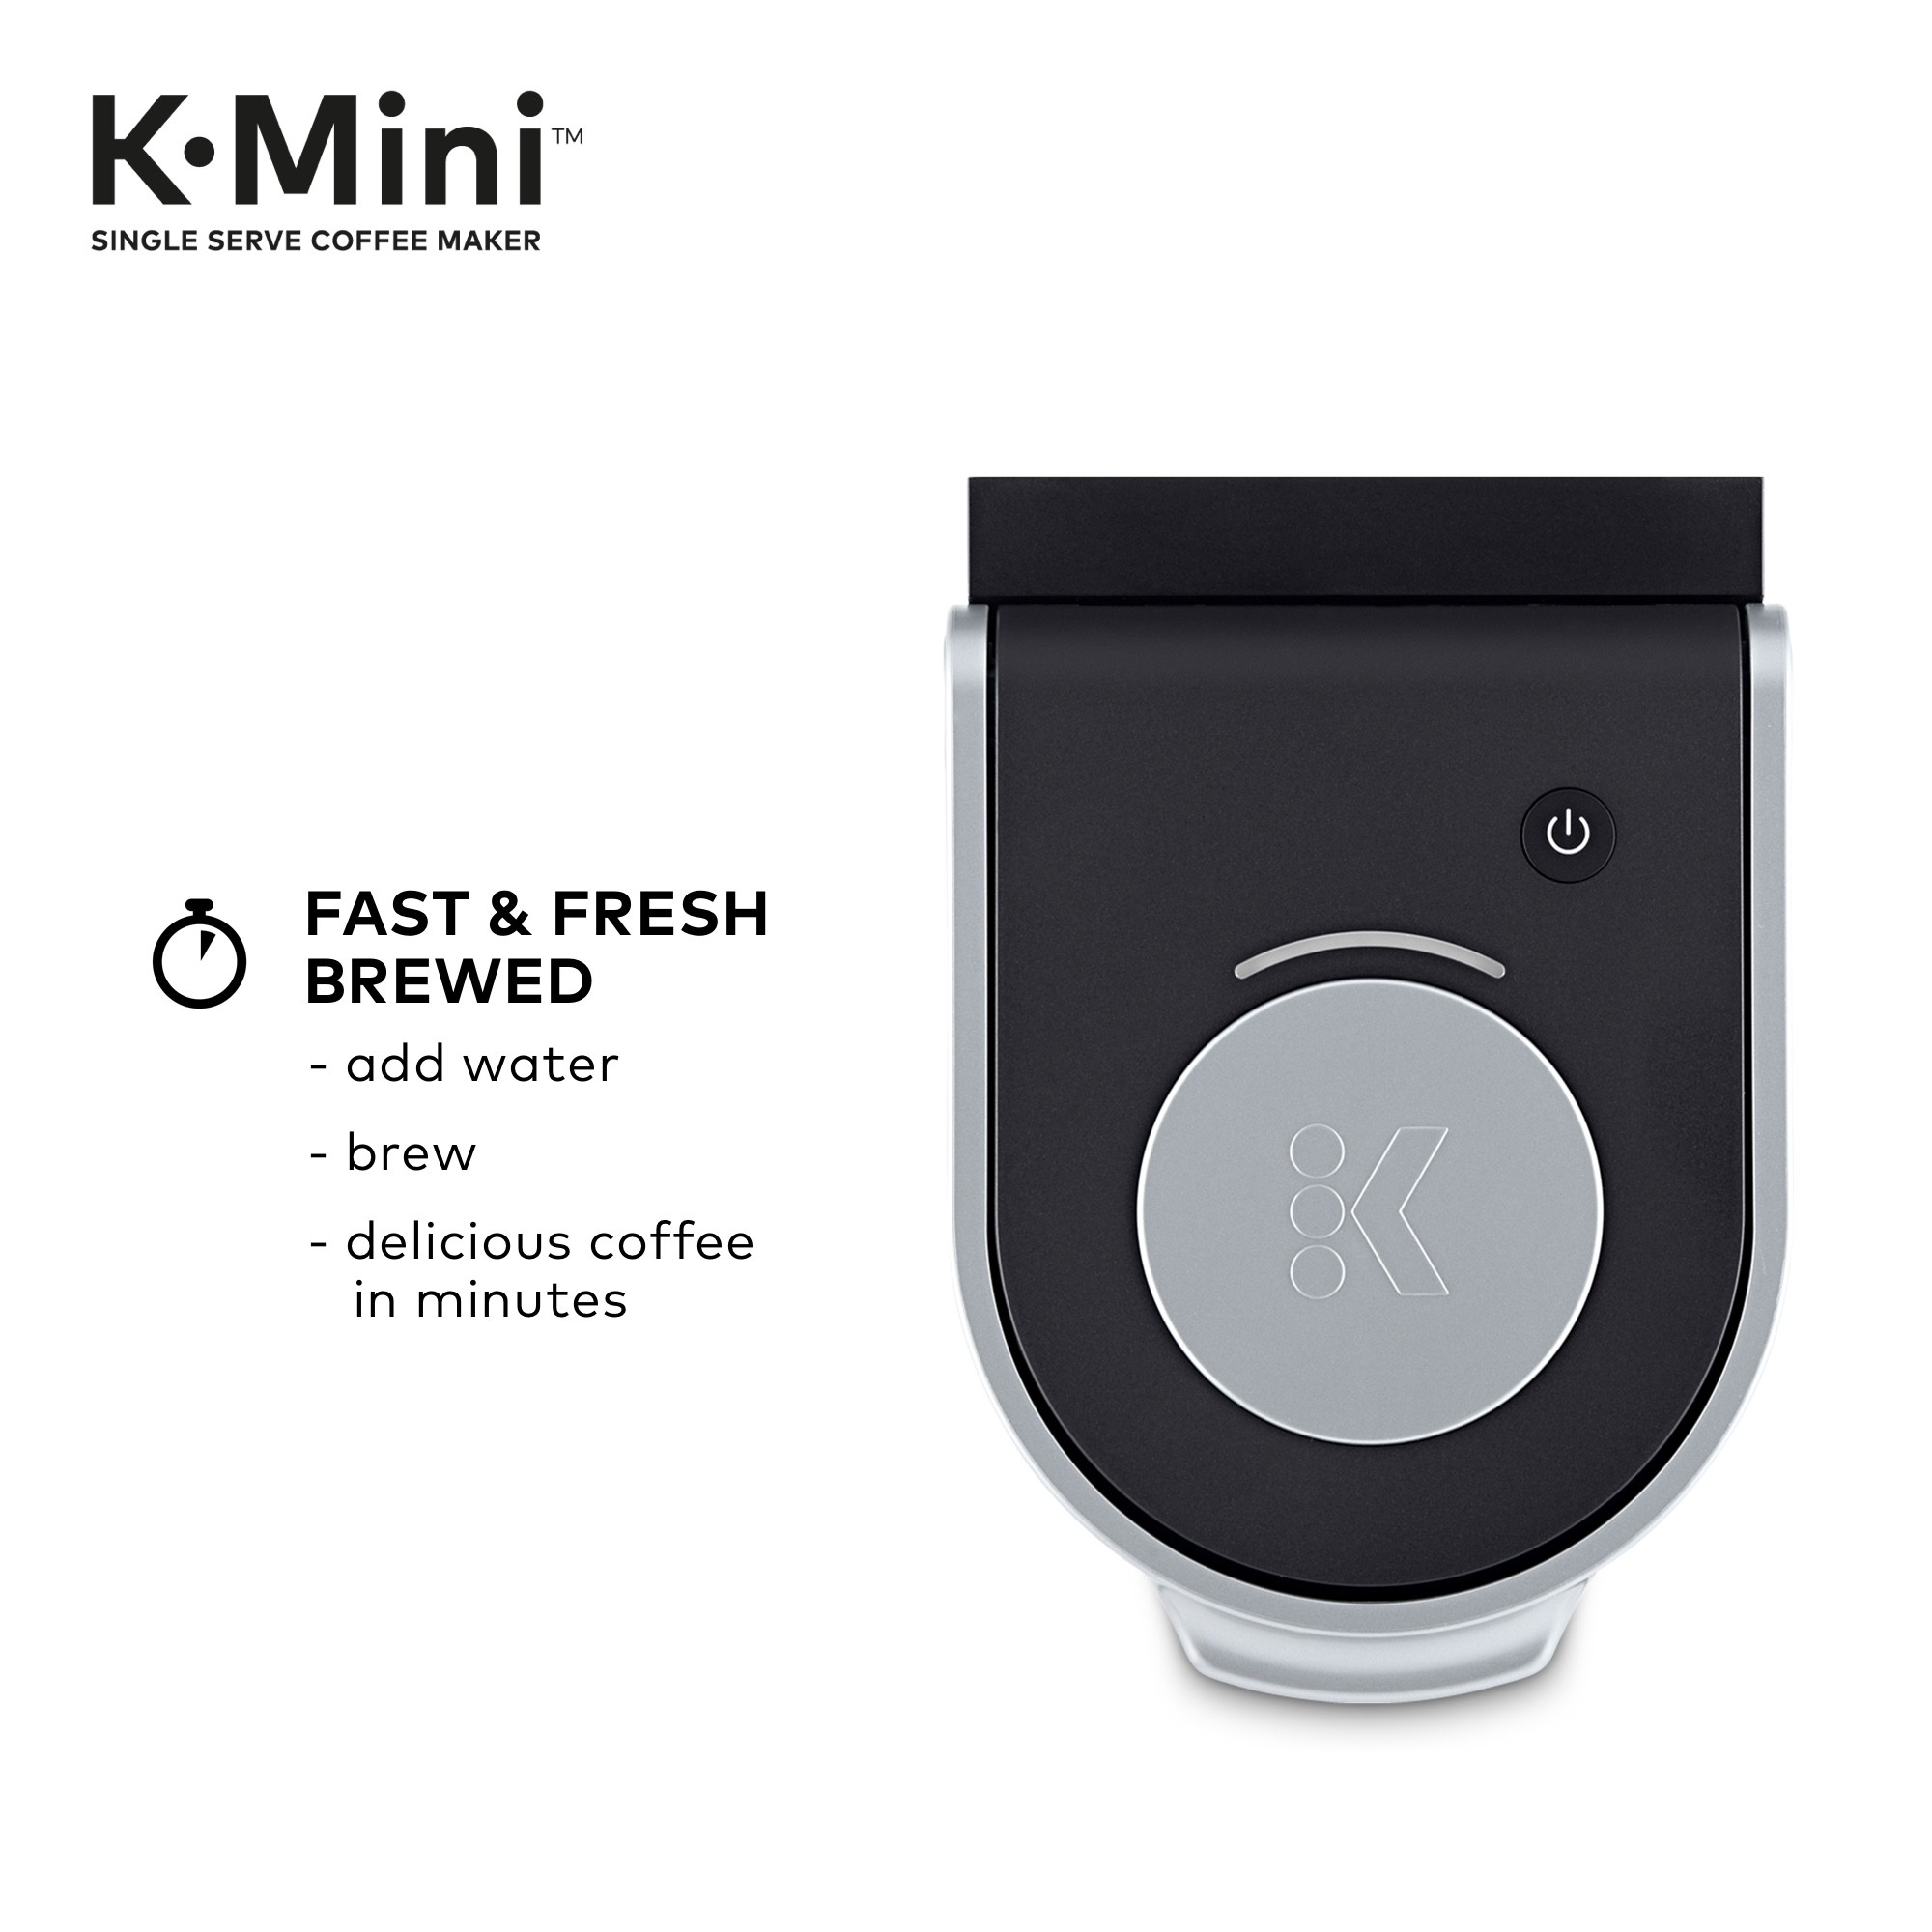 Keurig K-Mini Single Serve Coffee Maker, Black - image 5 of 21